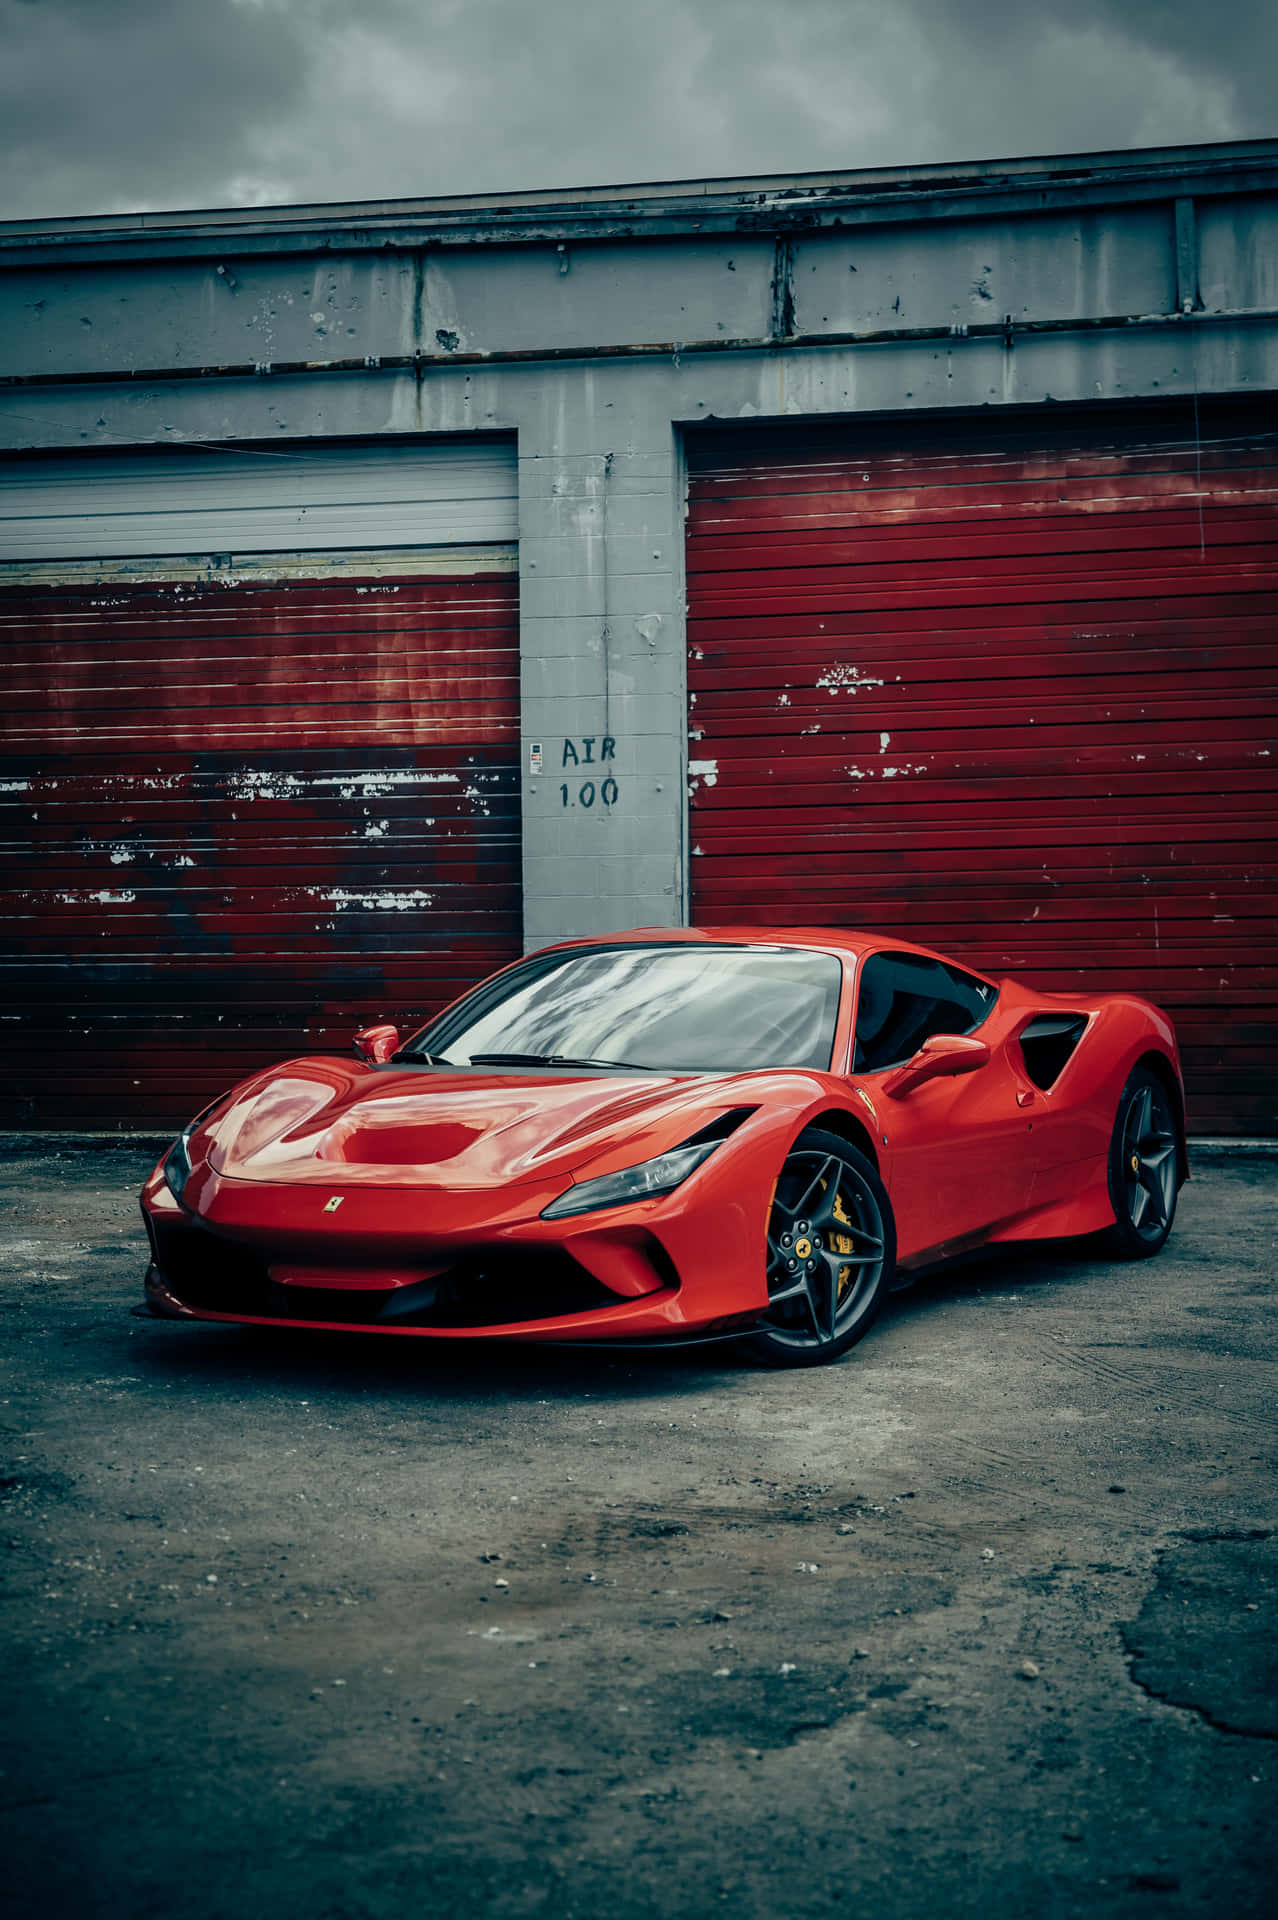 High-intensity Performance - The Mighty Ferrari